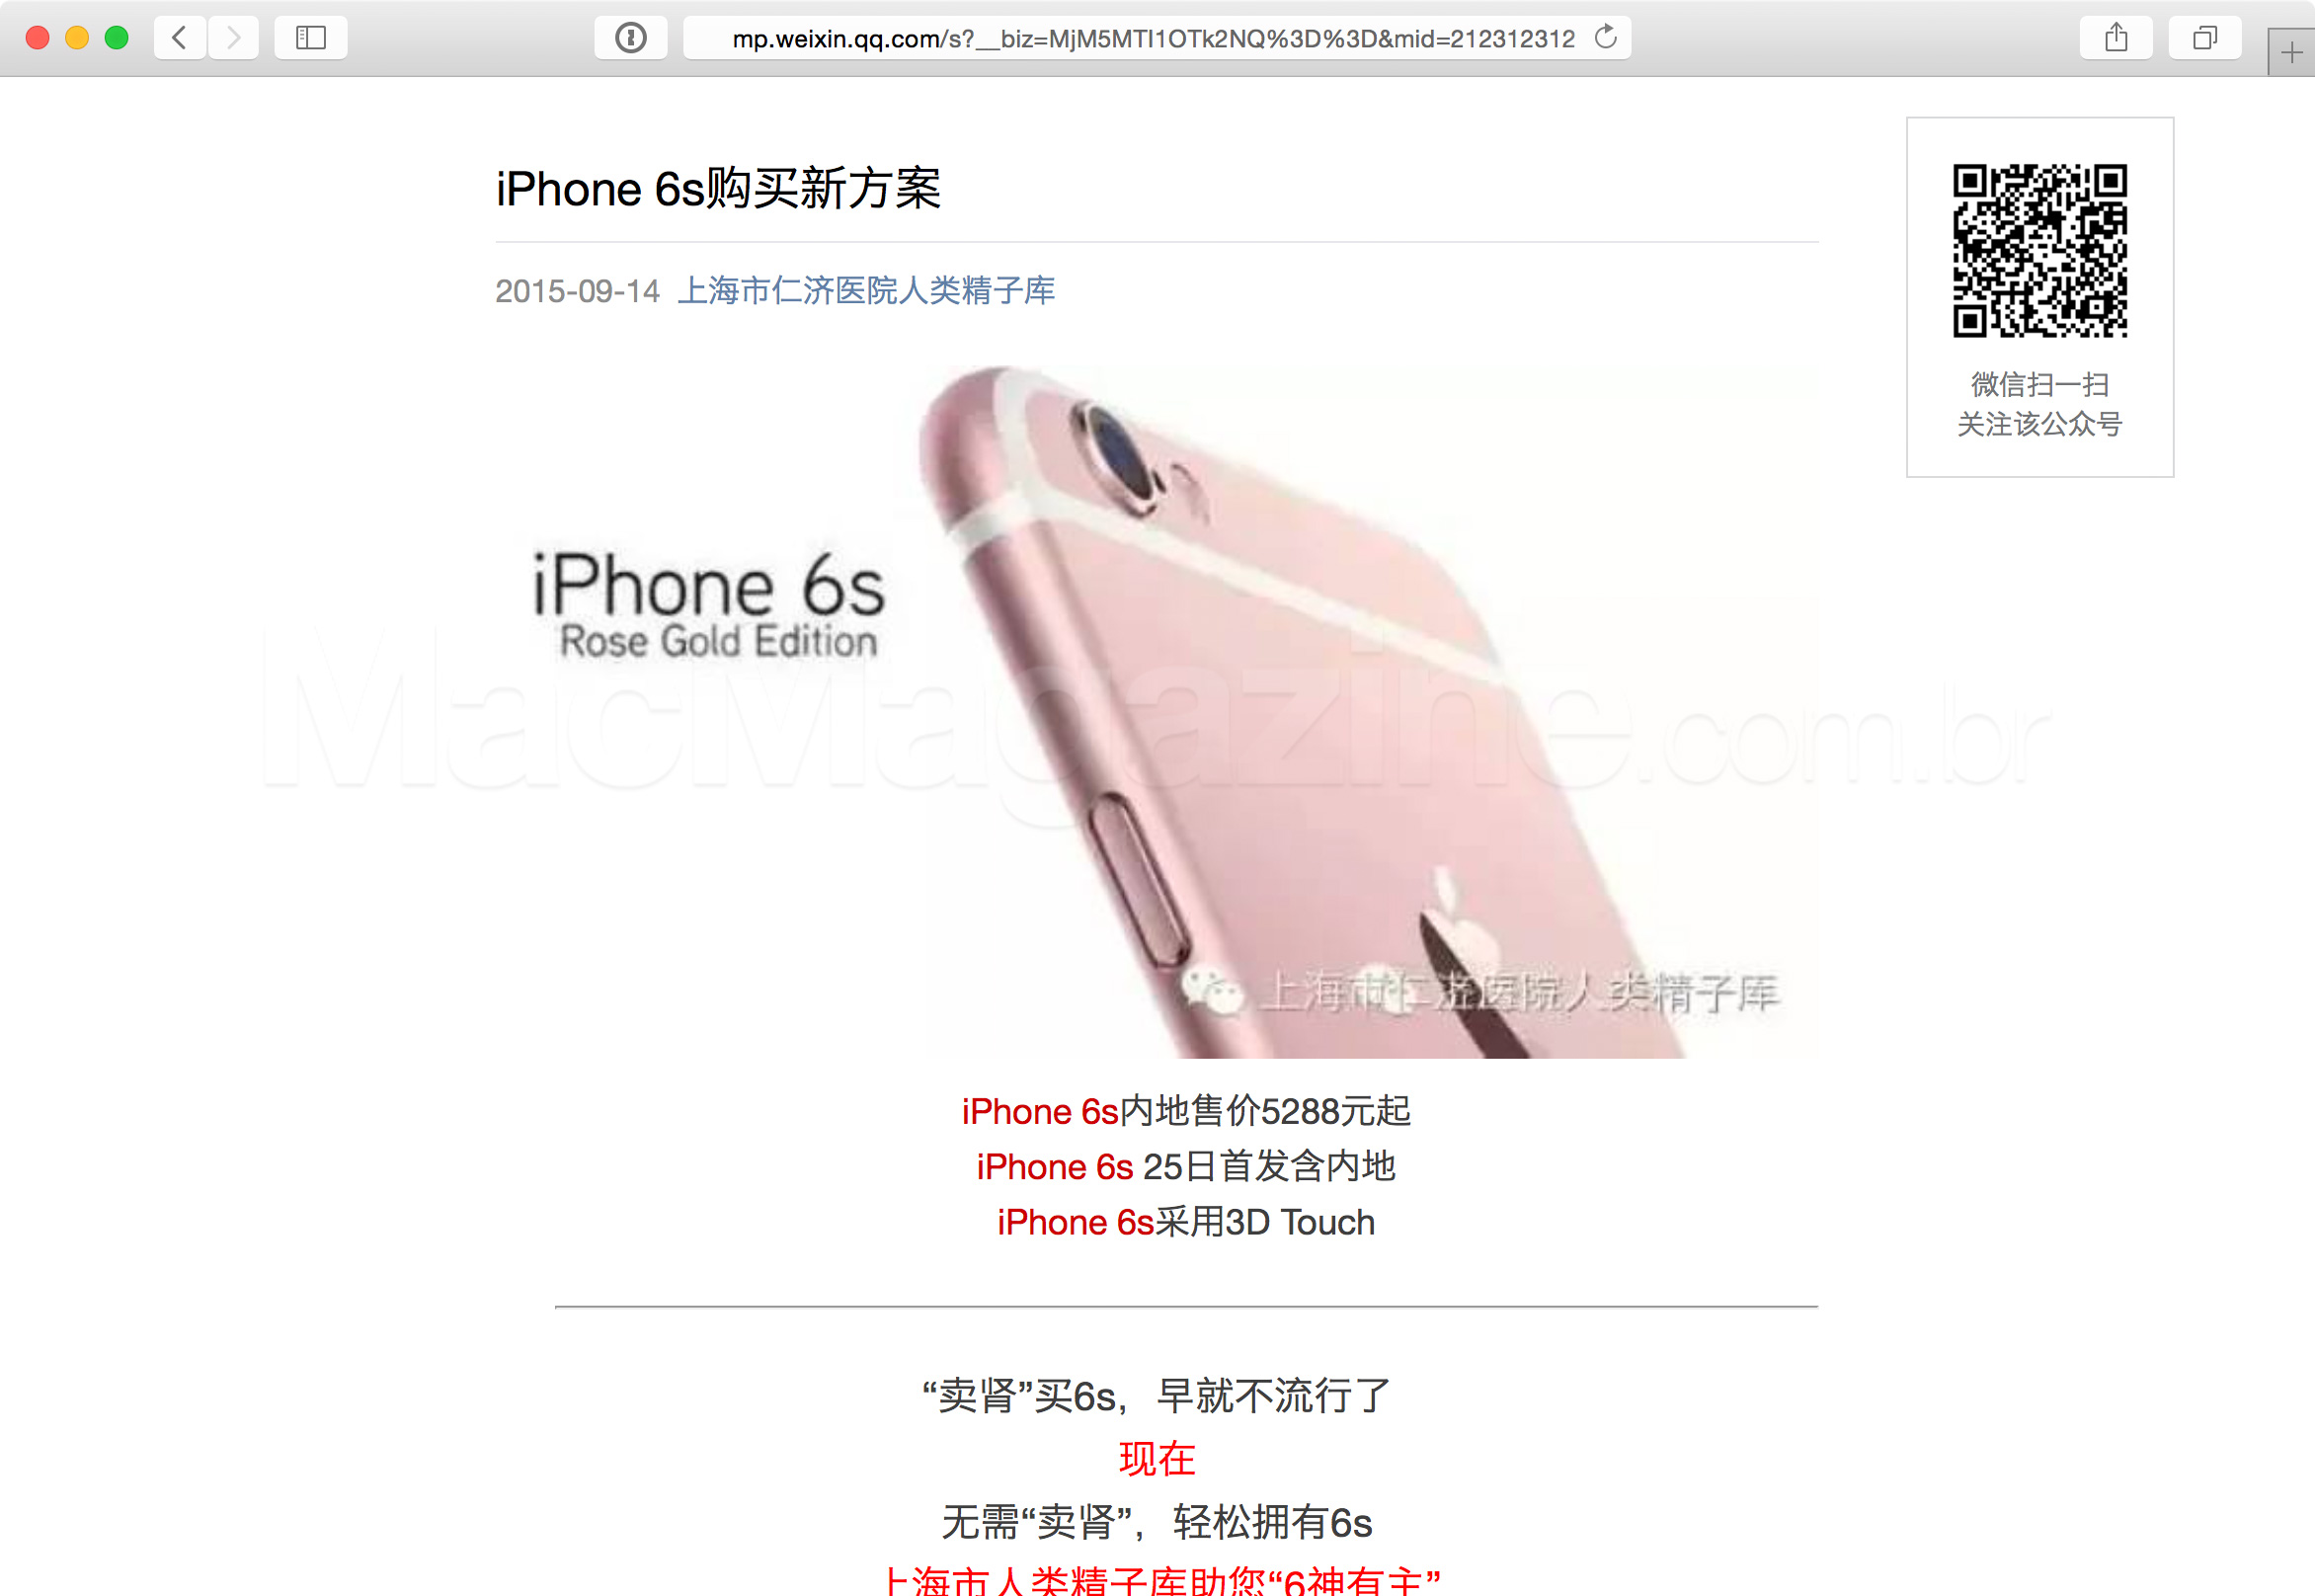 Esperma e iPhone 6s na China